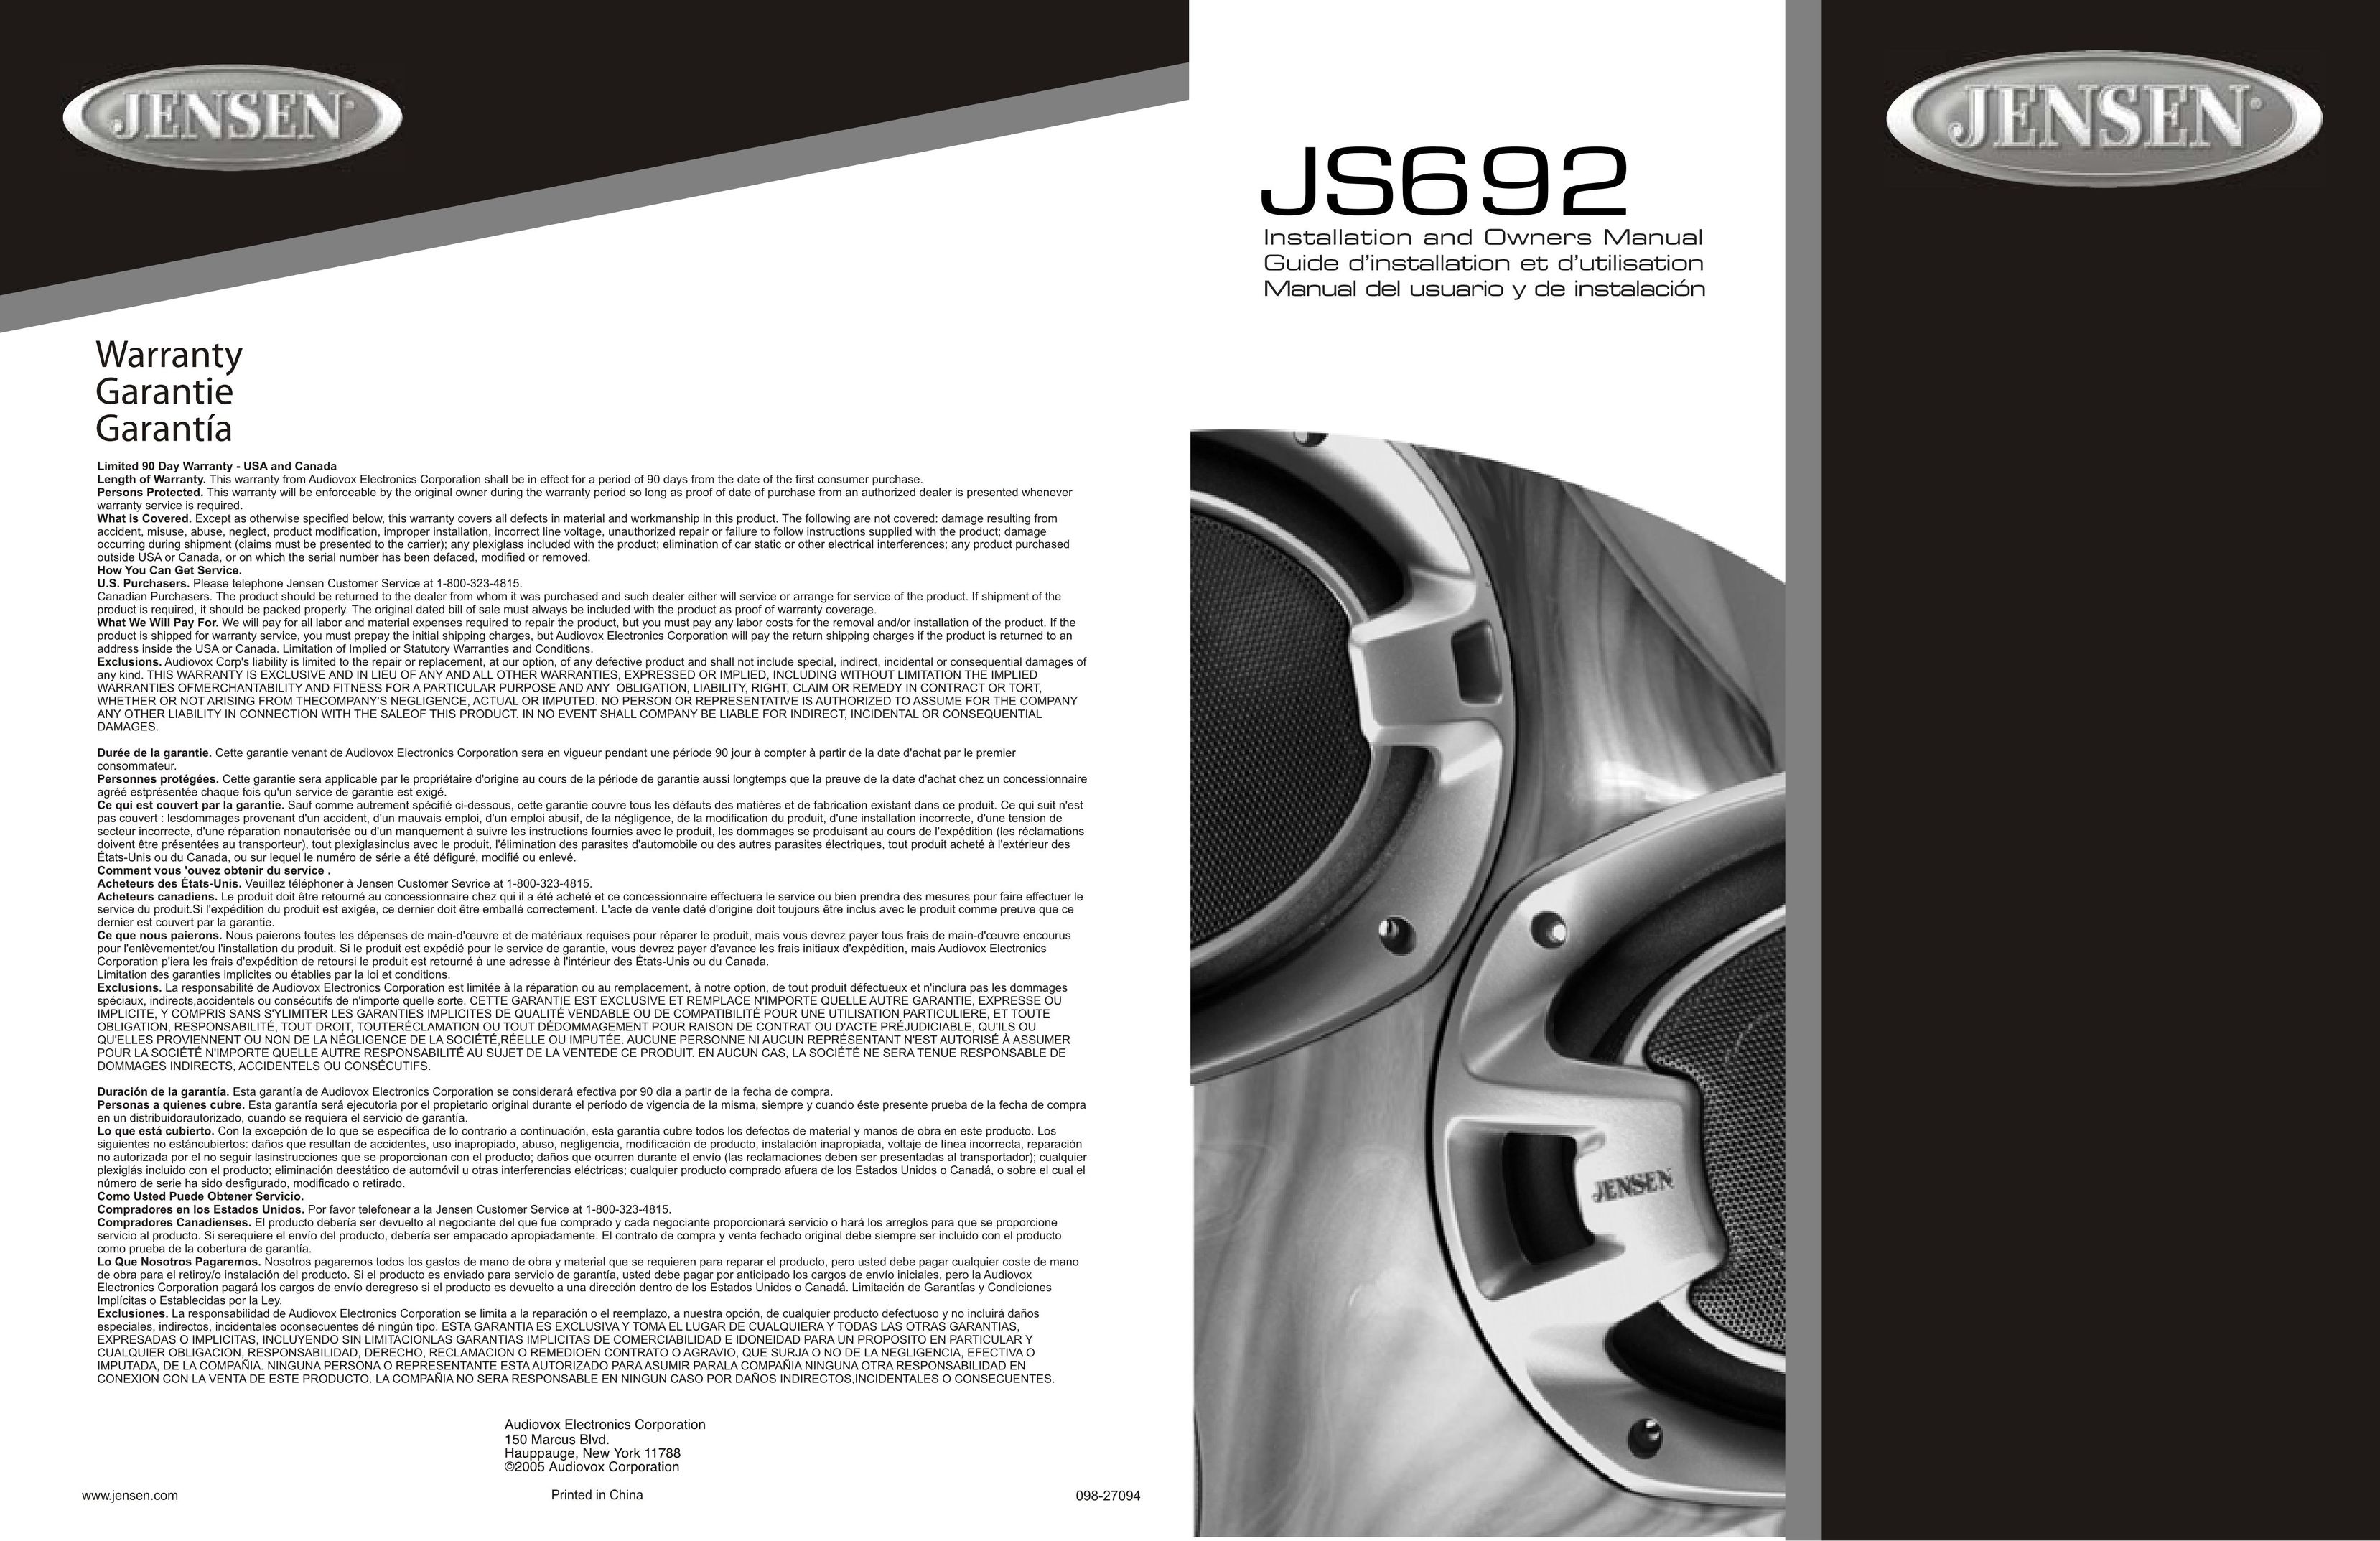 Jensen JS692 Car Speaker User Manual